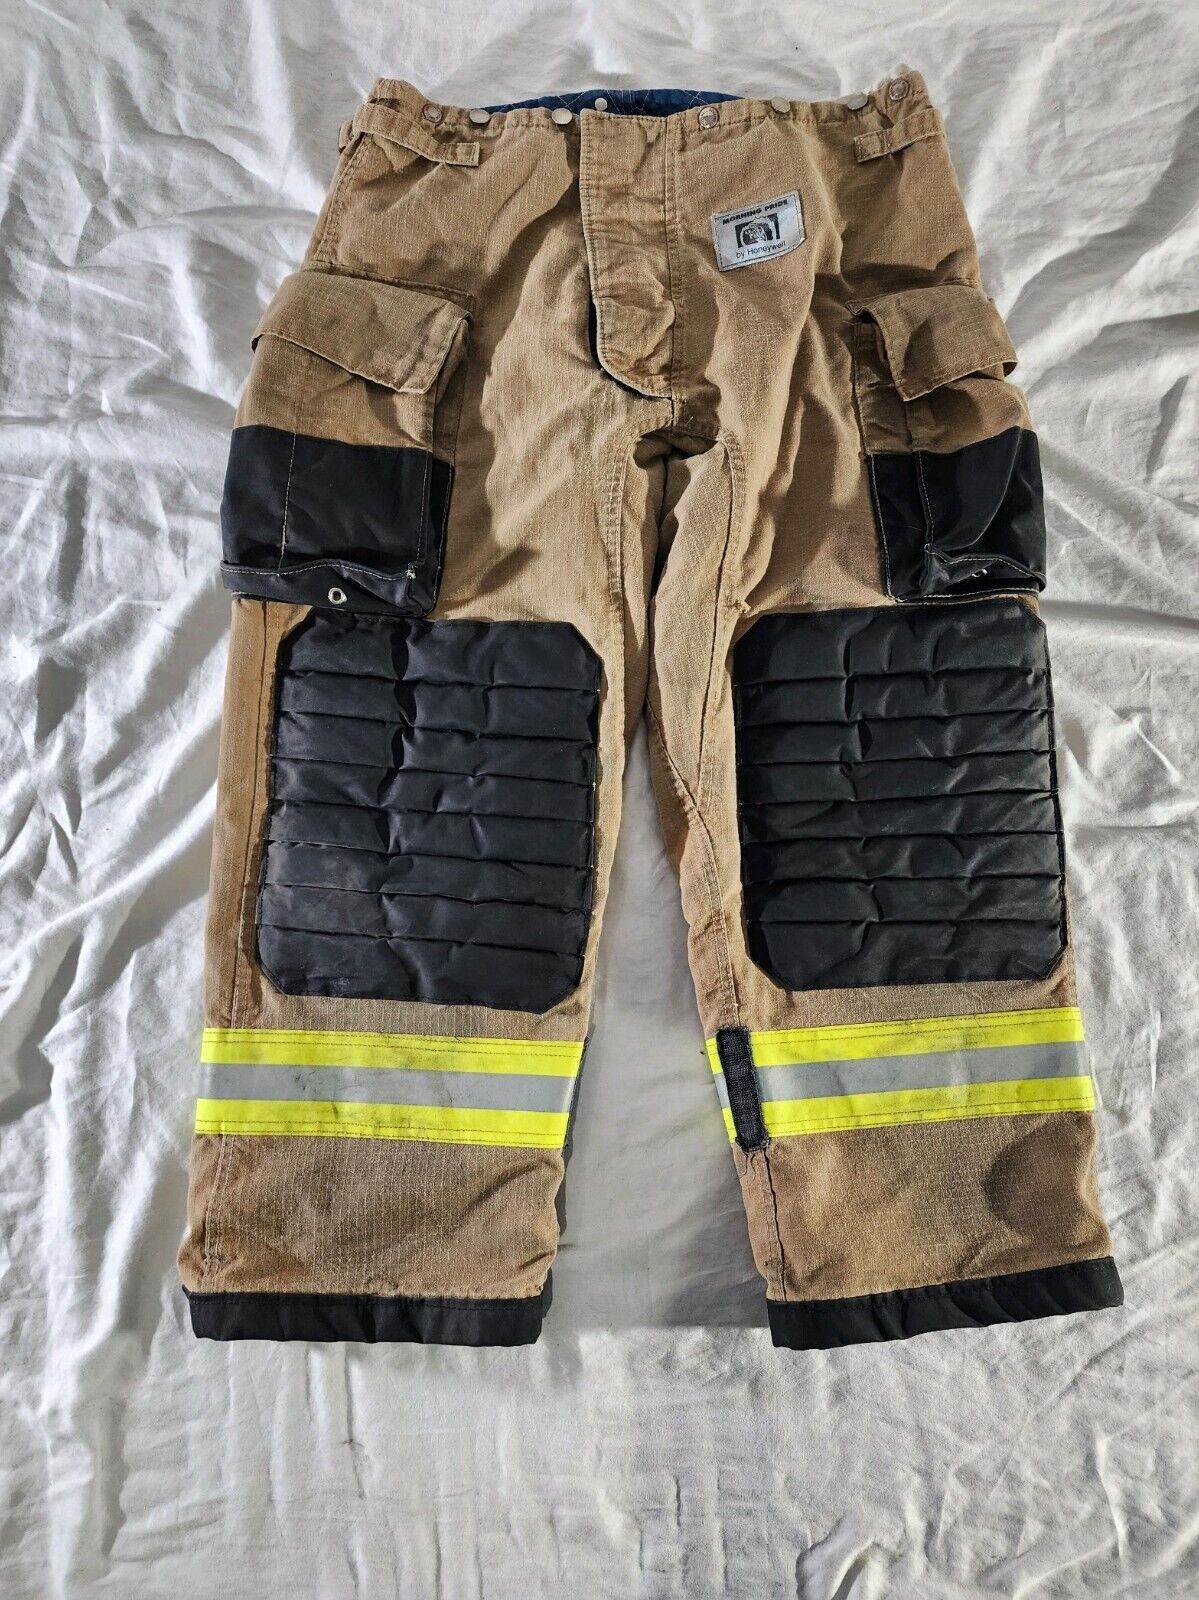 Morning Pride By Honeywell Firefighter Fireman Pants Turnout Bunker Gear